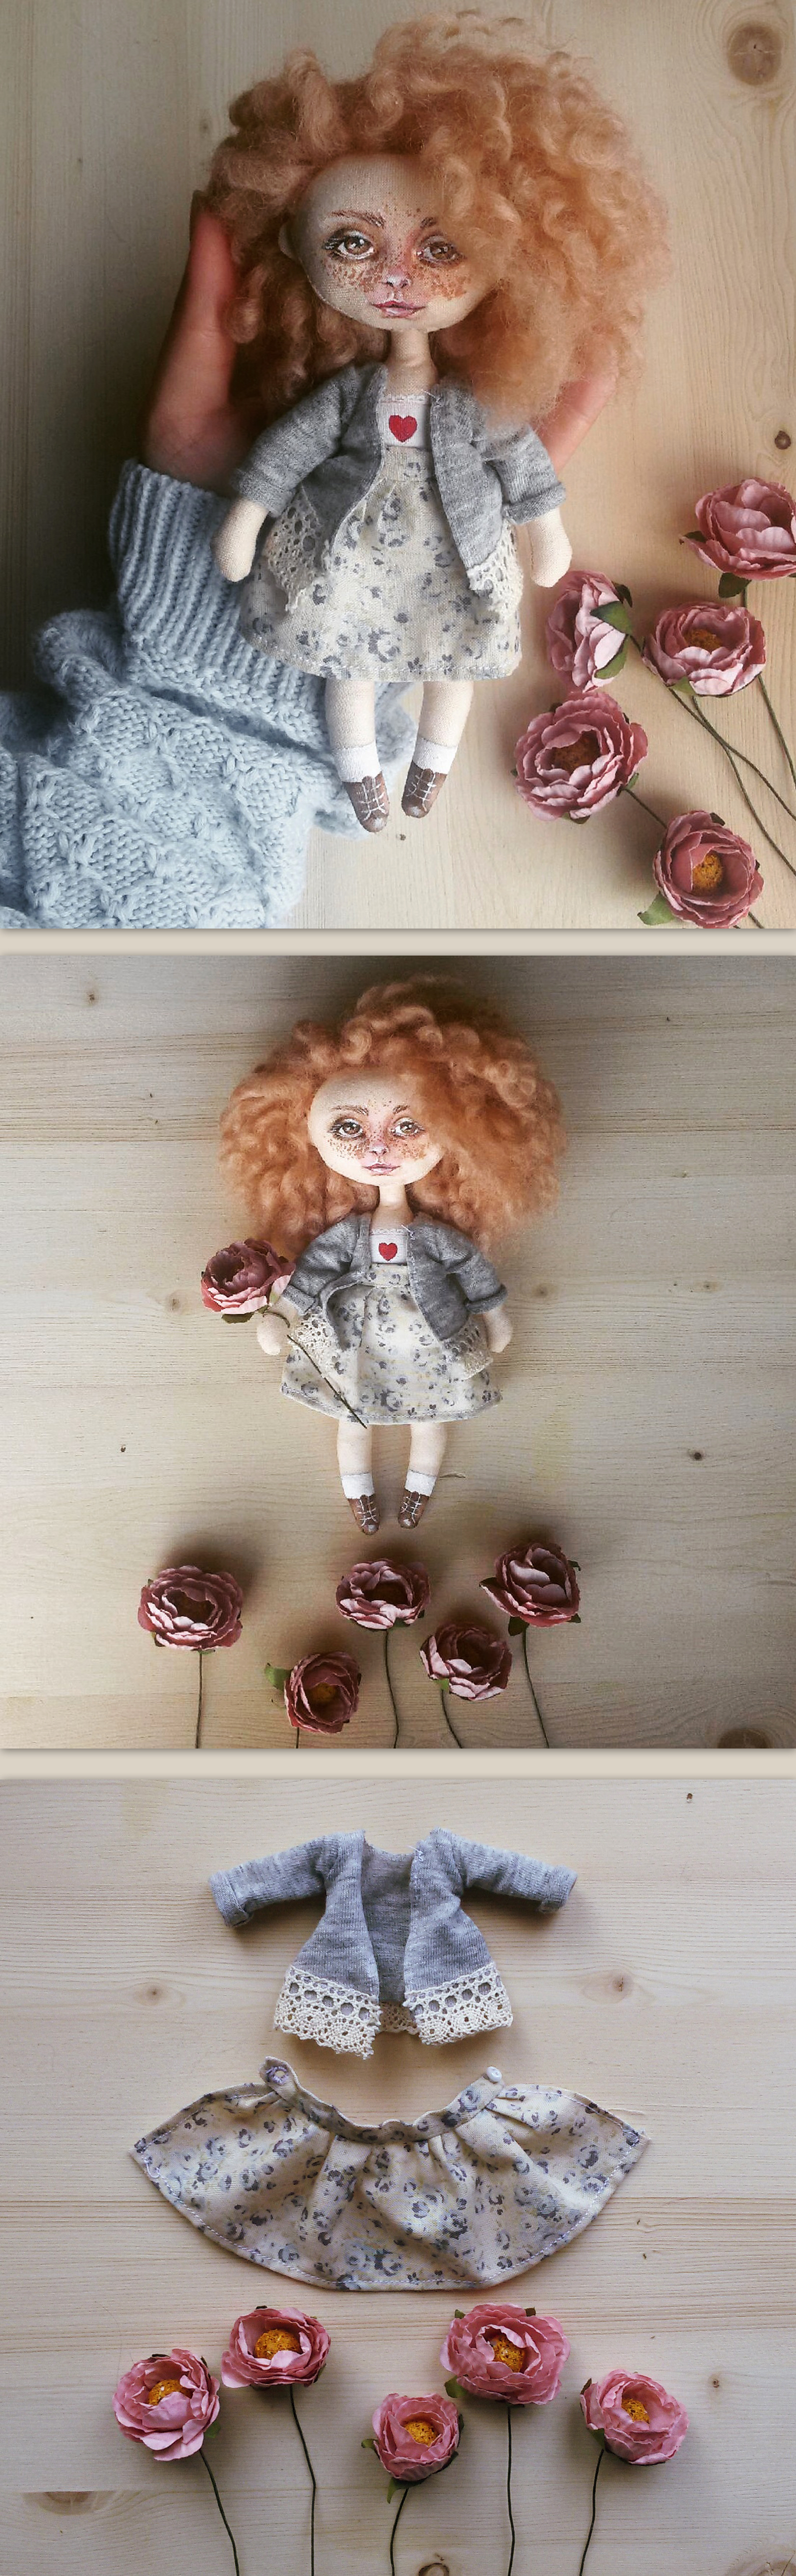 Miniature handmade textile doll - My, Longpost, Doll, Handmade, My, Creation, Toys, Miniature, Friday tag is mine